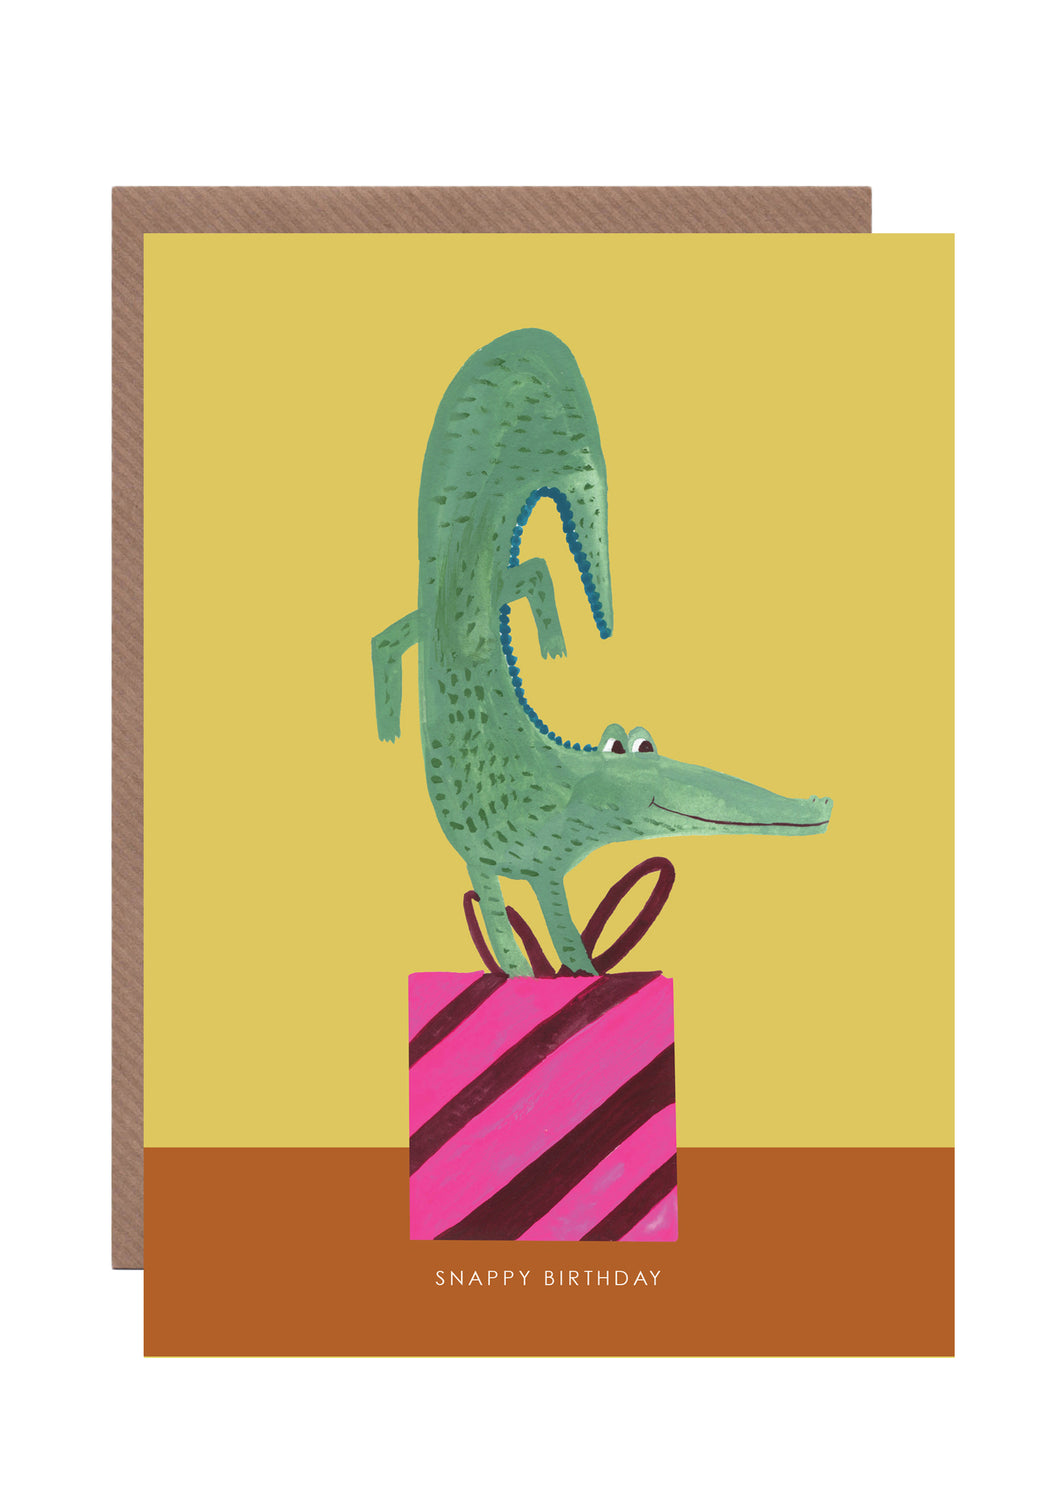 Dancing Croc On Present birthday card